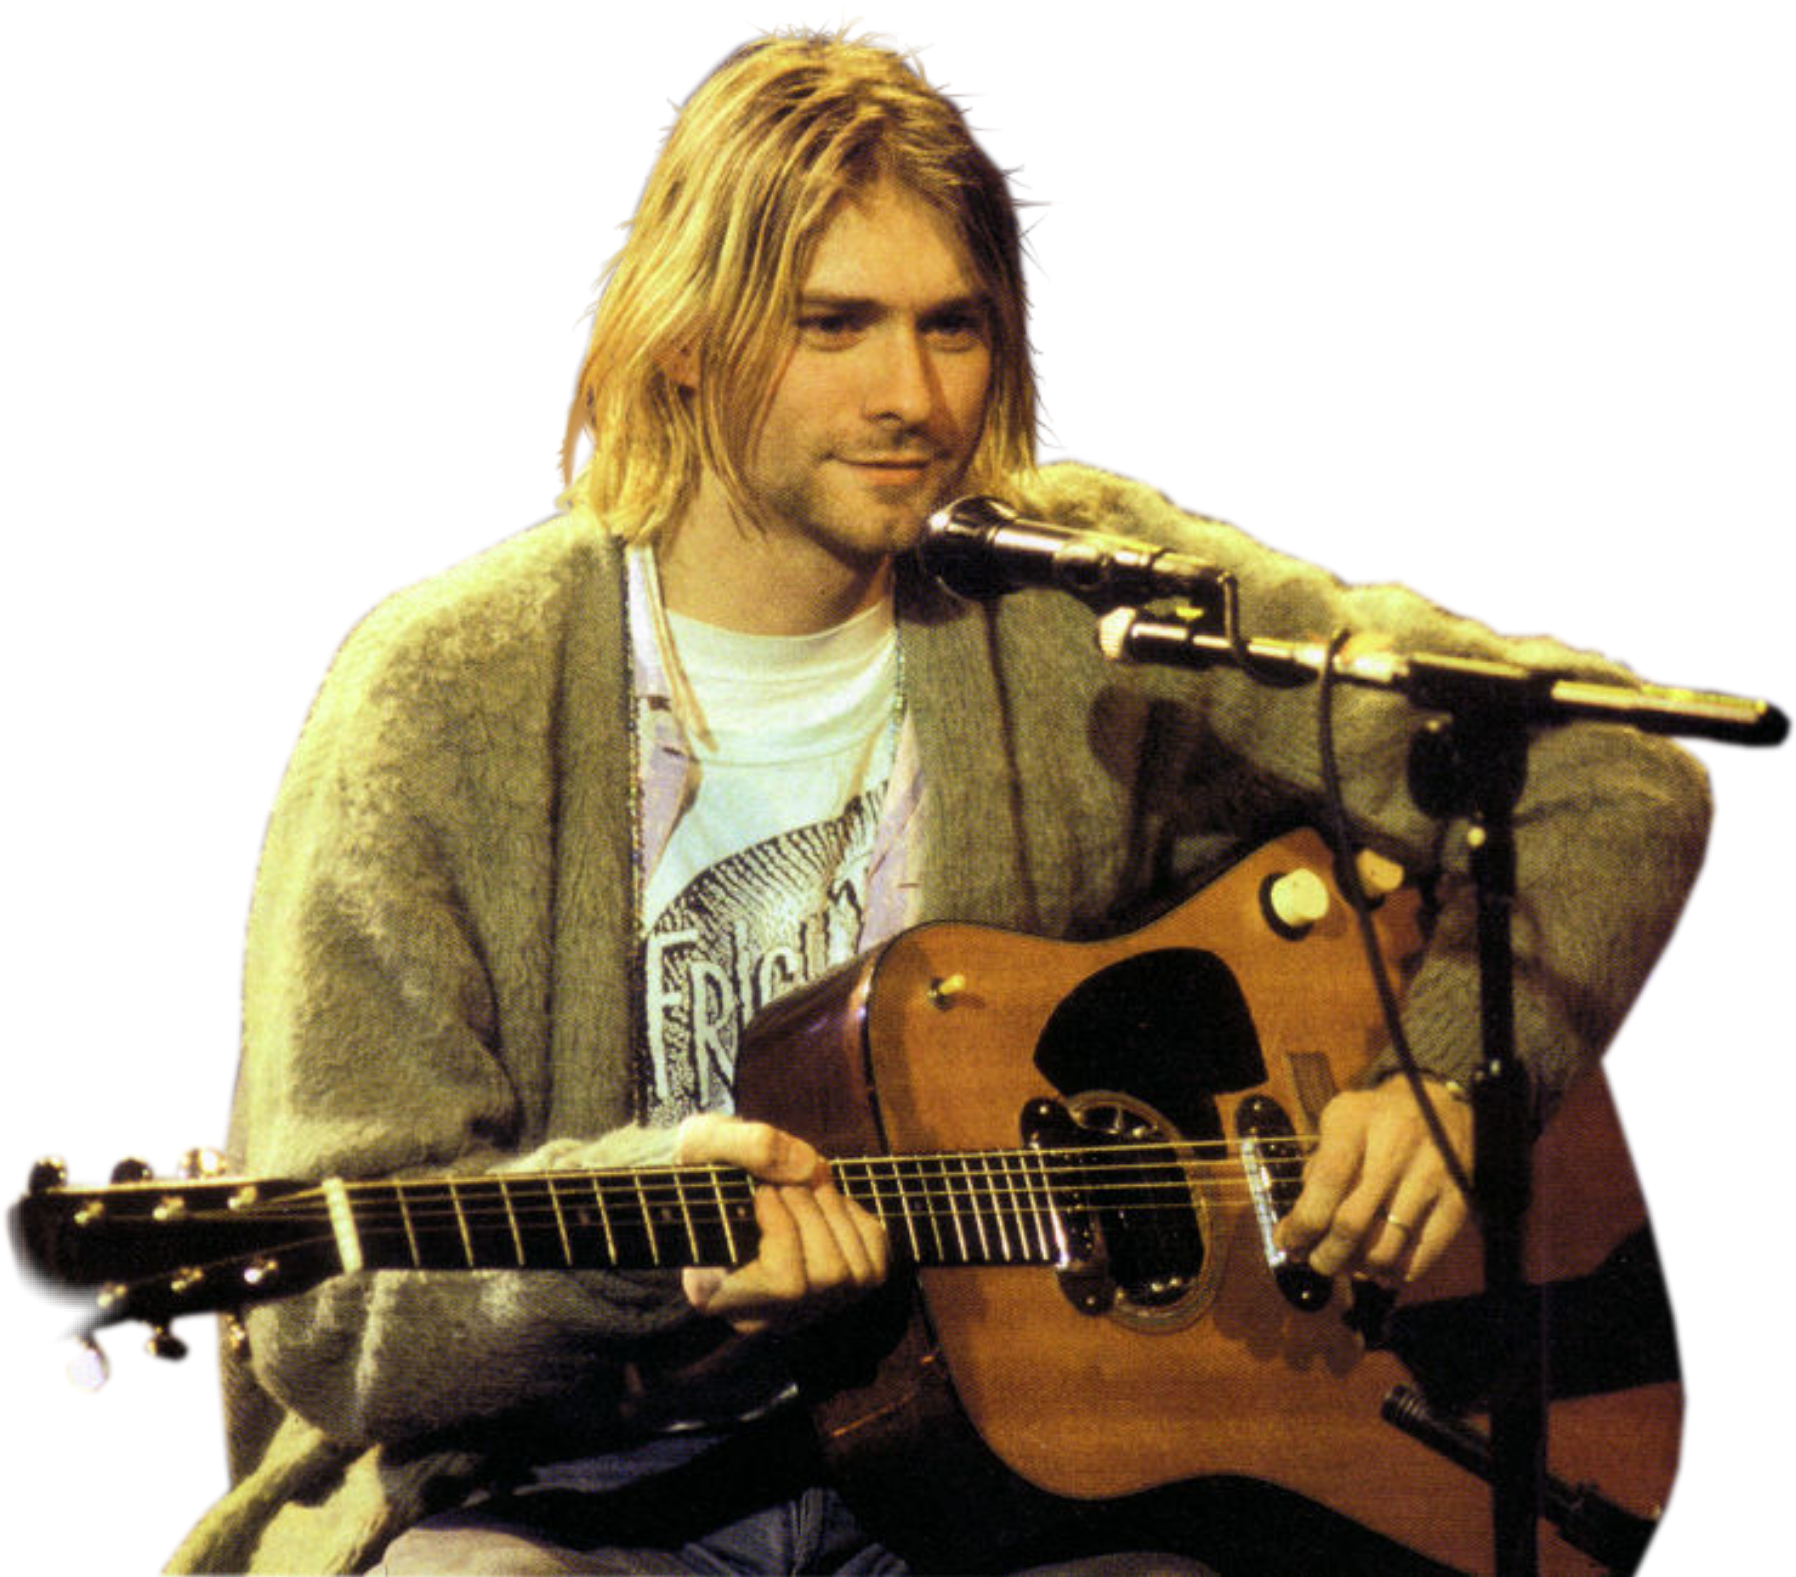 Курт Кобейн и Nirvana. Rehrj,TBY. Rewh RJ,Qty. Курт RJ,TQYPNG. Nirvana guitar